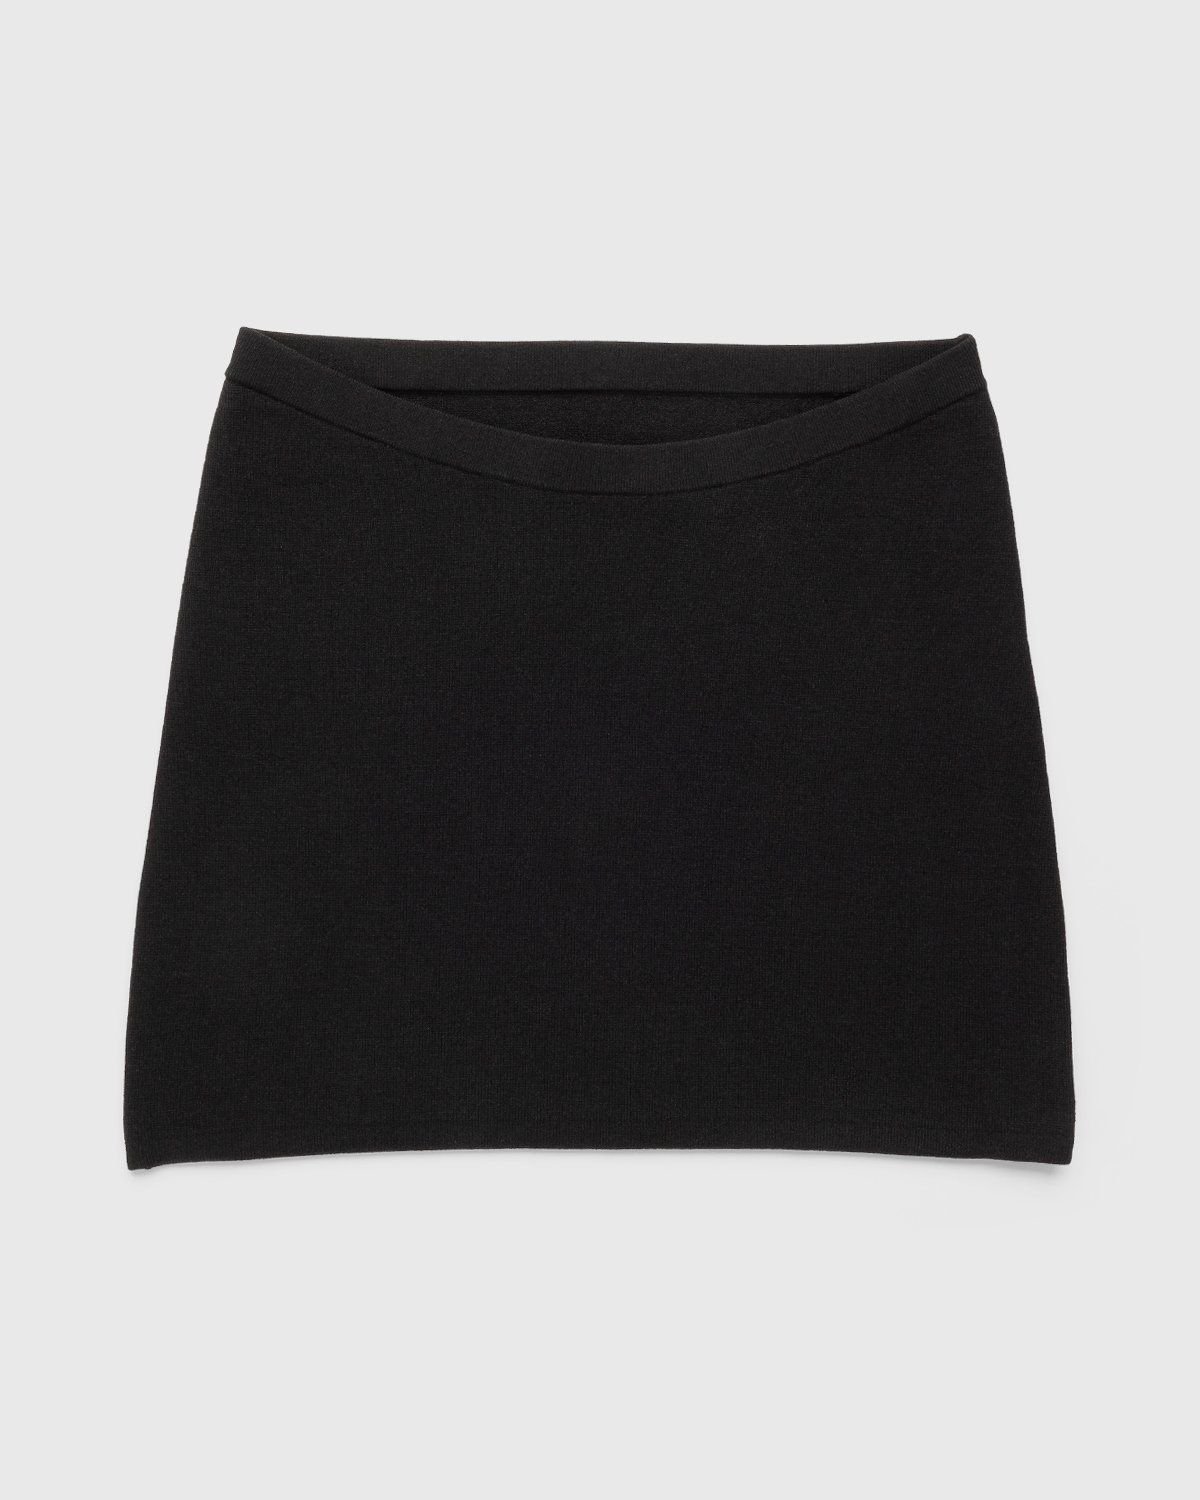 Heron Preston x Calvin Klein – Womens Mini Skirt Black